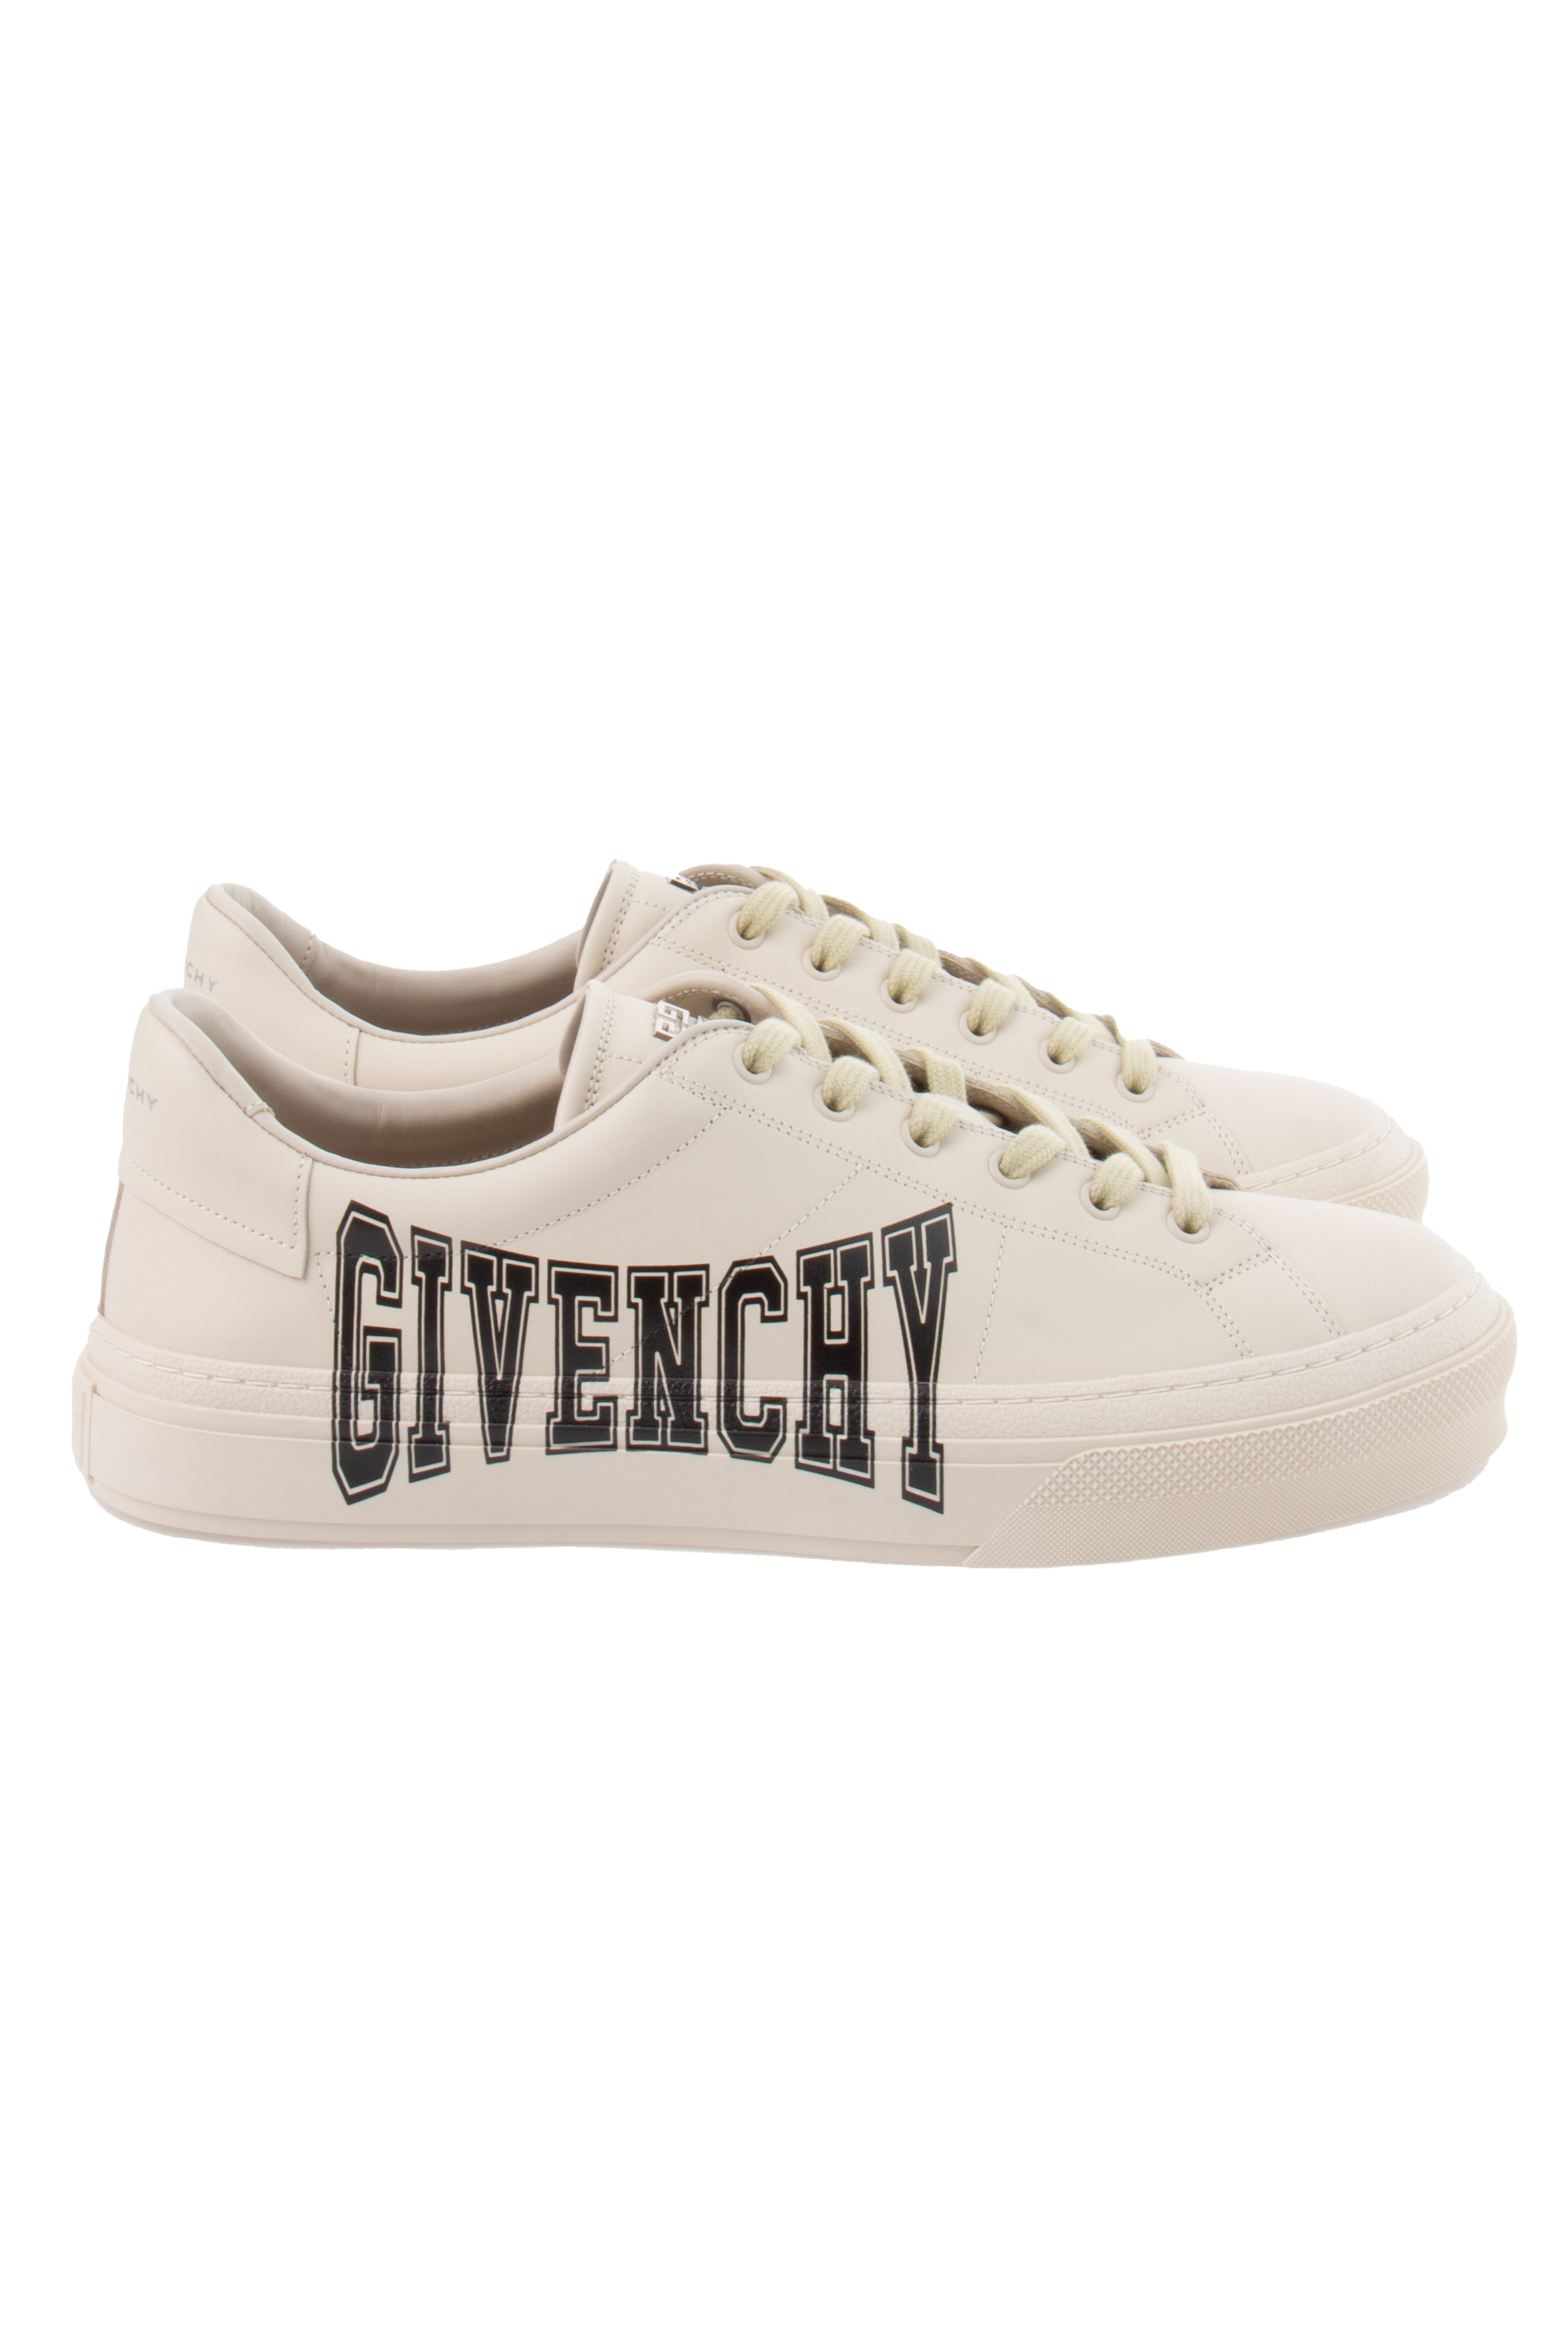 Givenchy | City sport white elastic sneakers | Savannahs